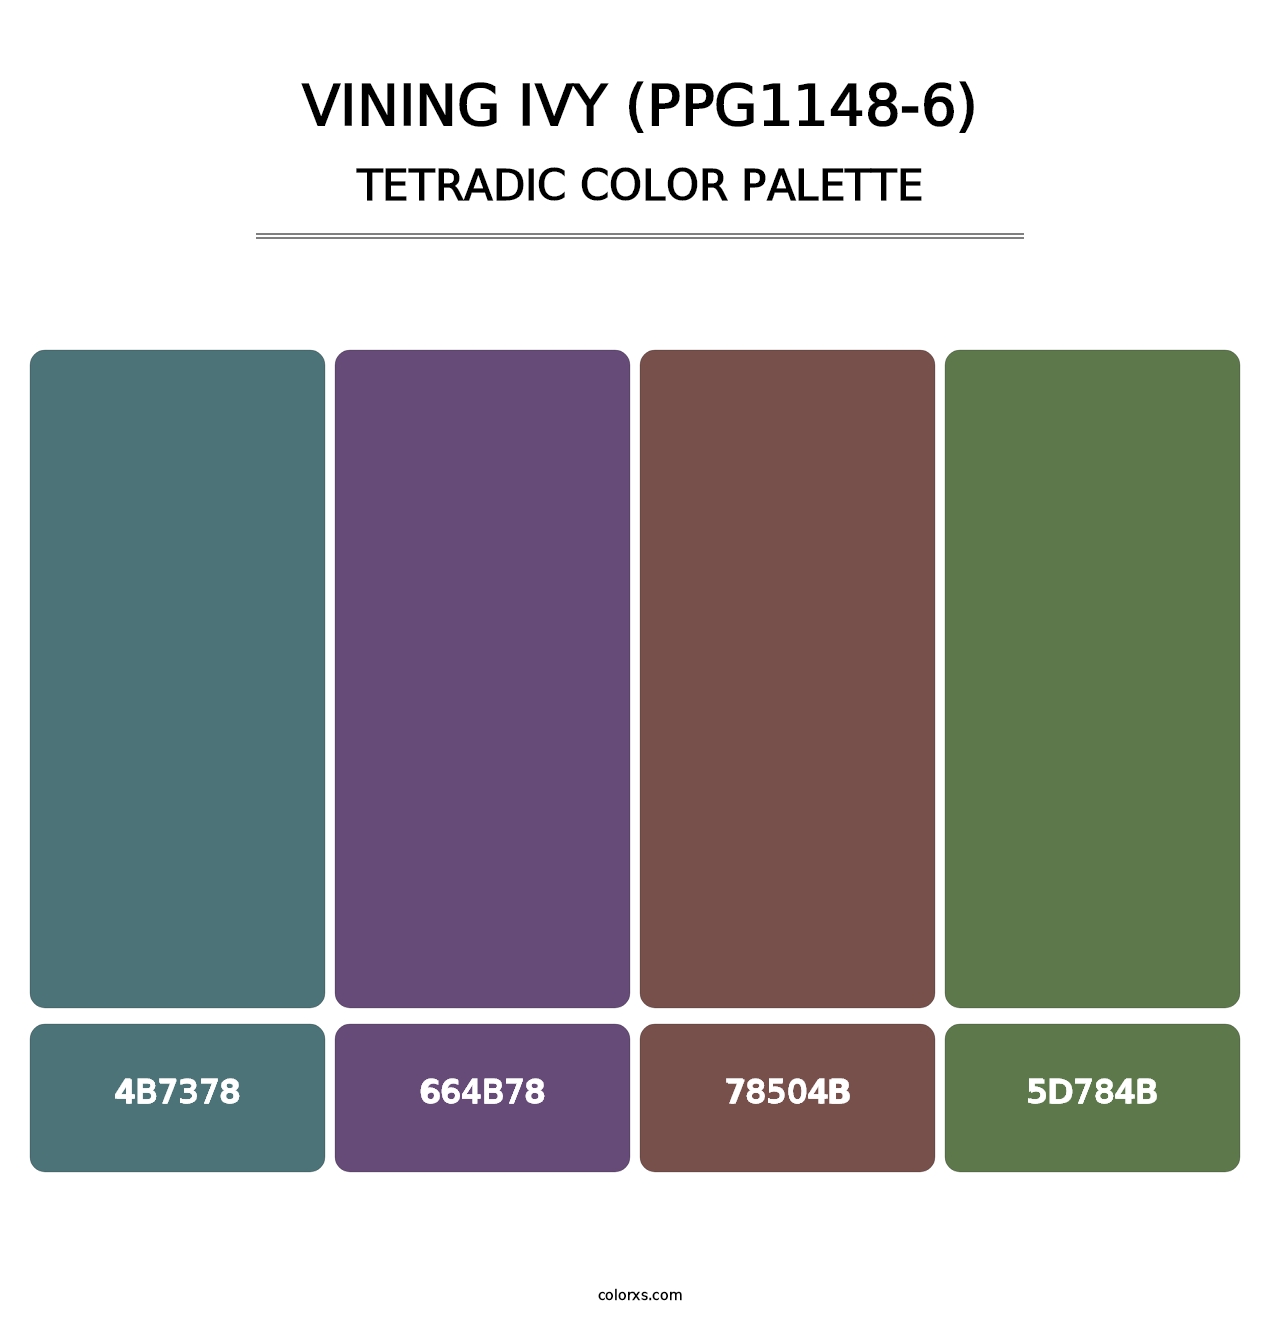 Vining Ivy (PPG1148-6) - Tetradic Color Palette